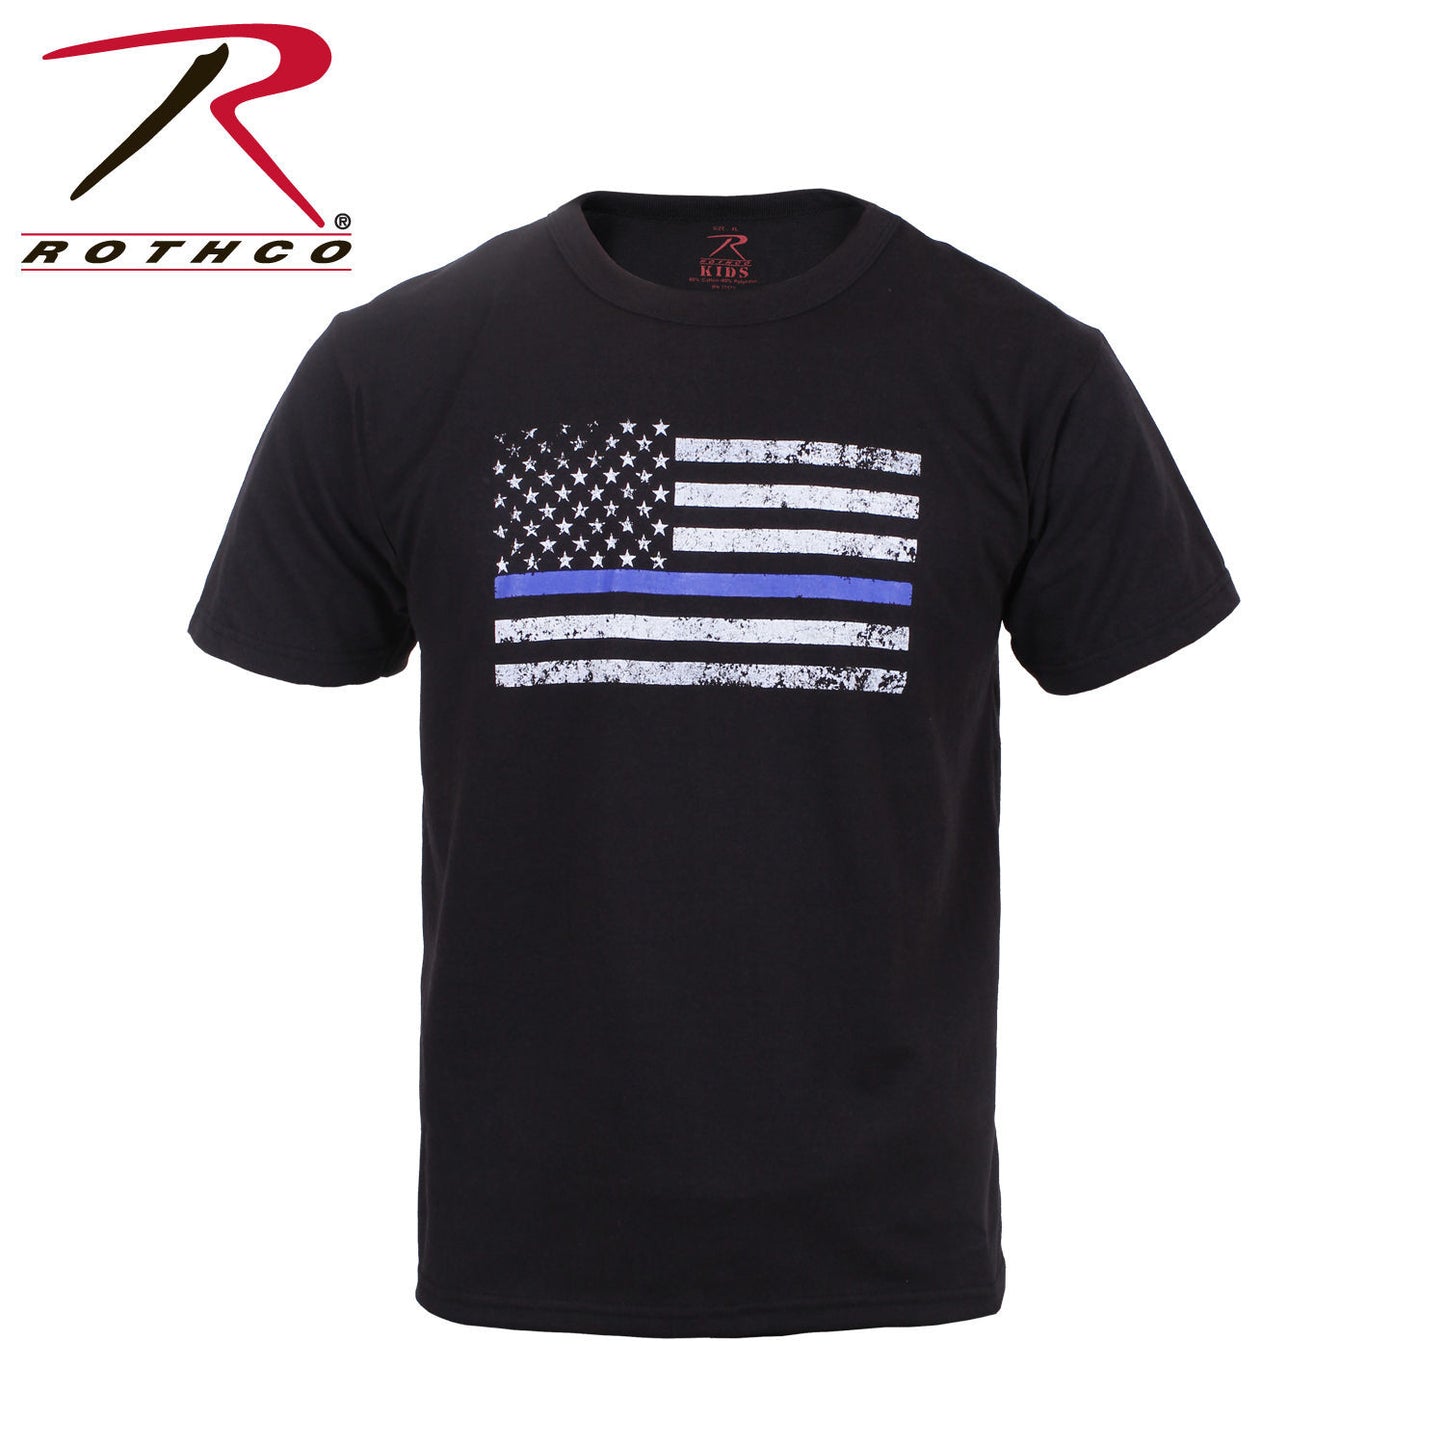 Kids Thin Blue Line US Flag Tee - Rothco TBL T-Shirt